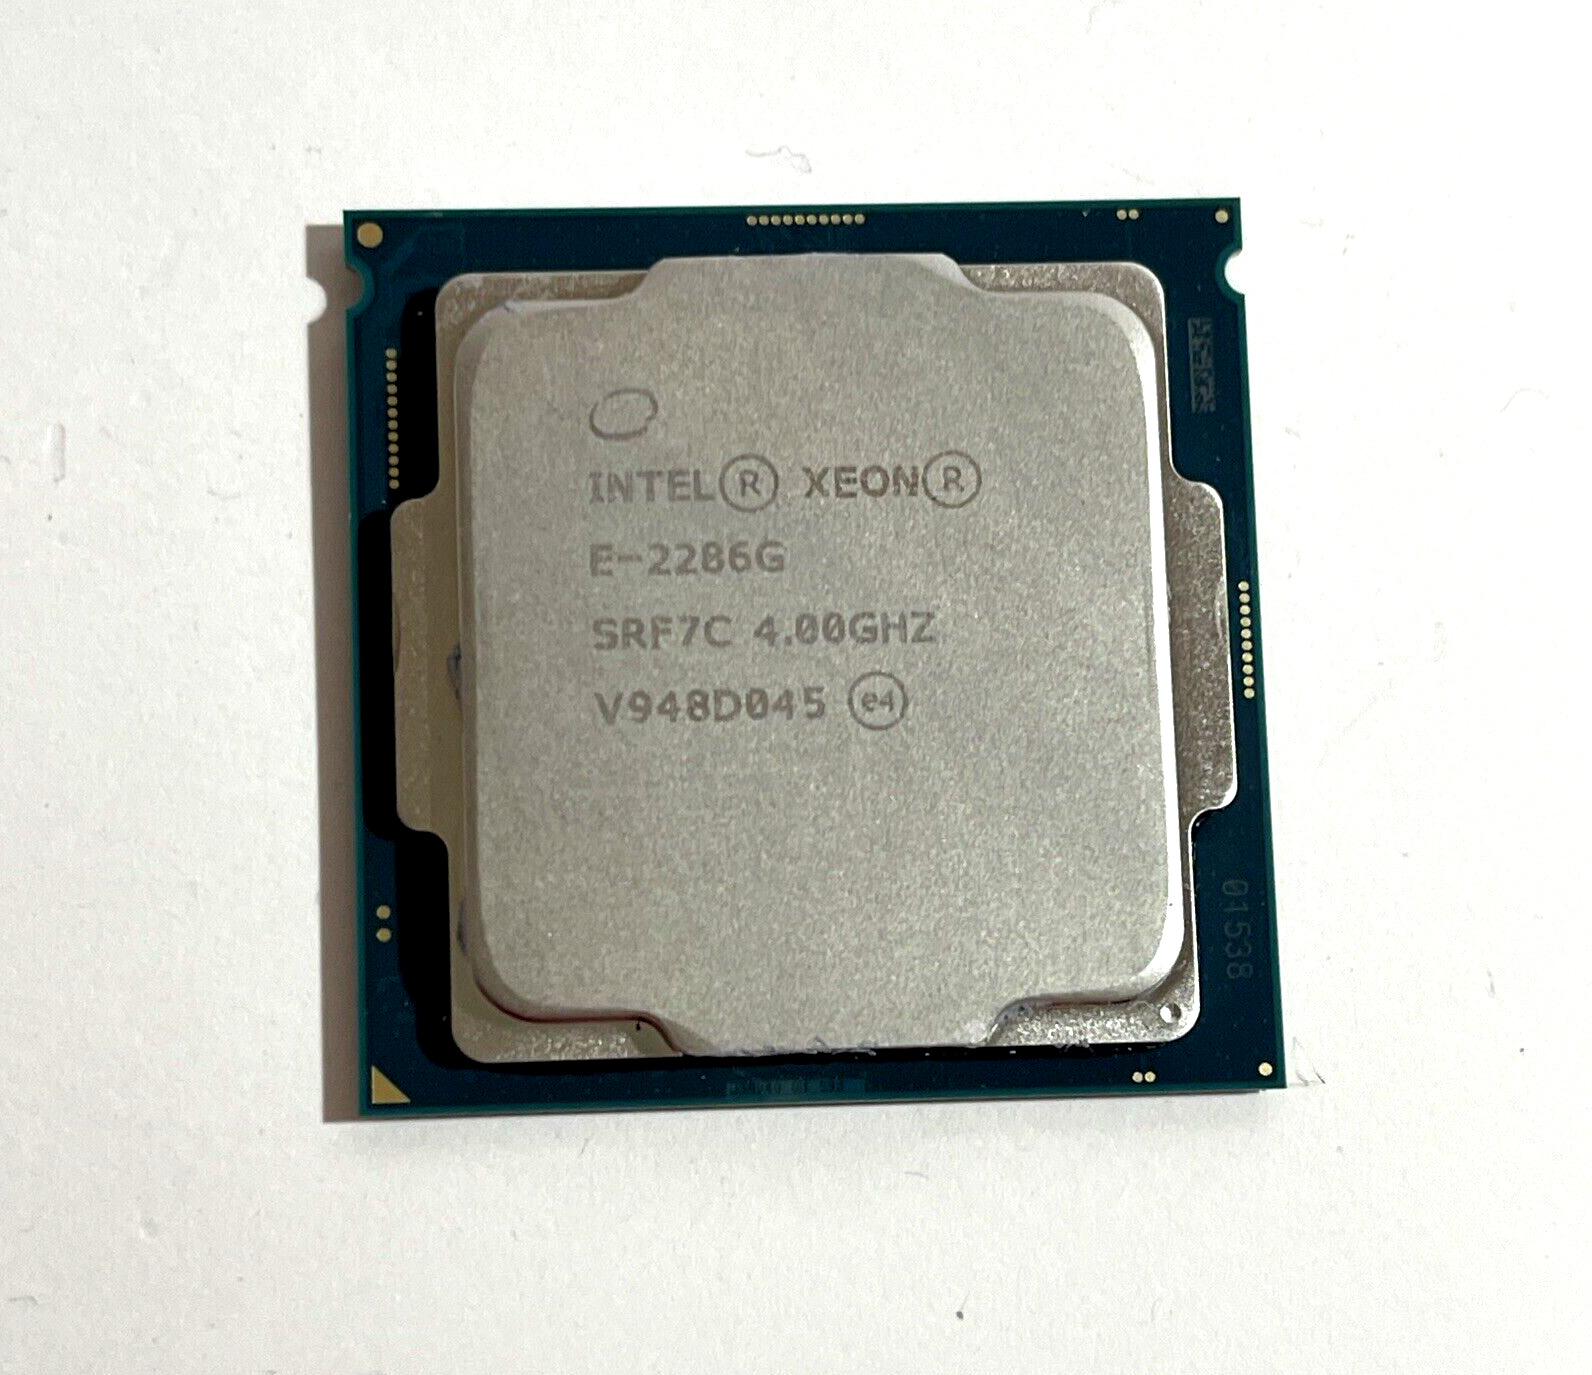 Intel Xeon E-2286G 4.0-4.9Ghz 6CORE 12M 95W SRF7C LGA1151 CPU